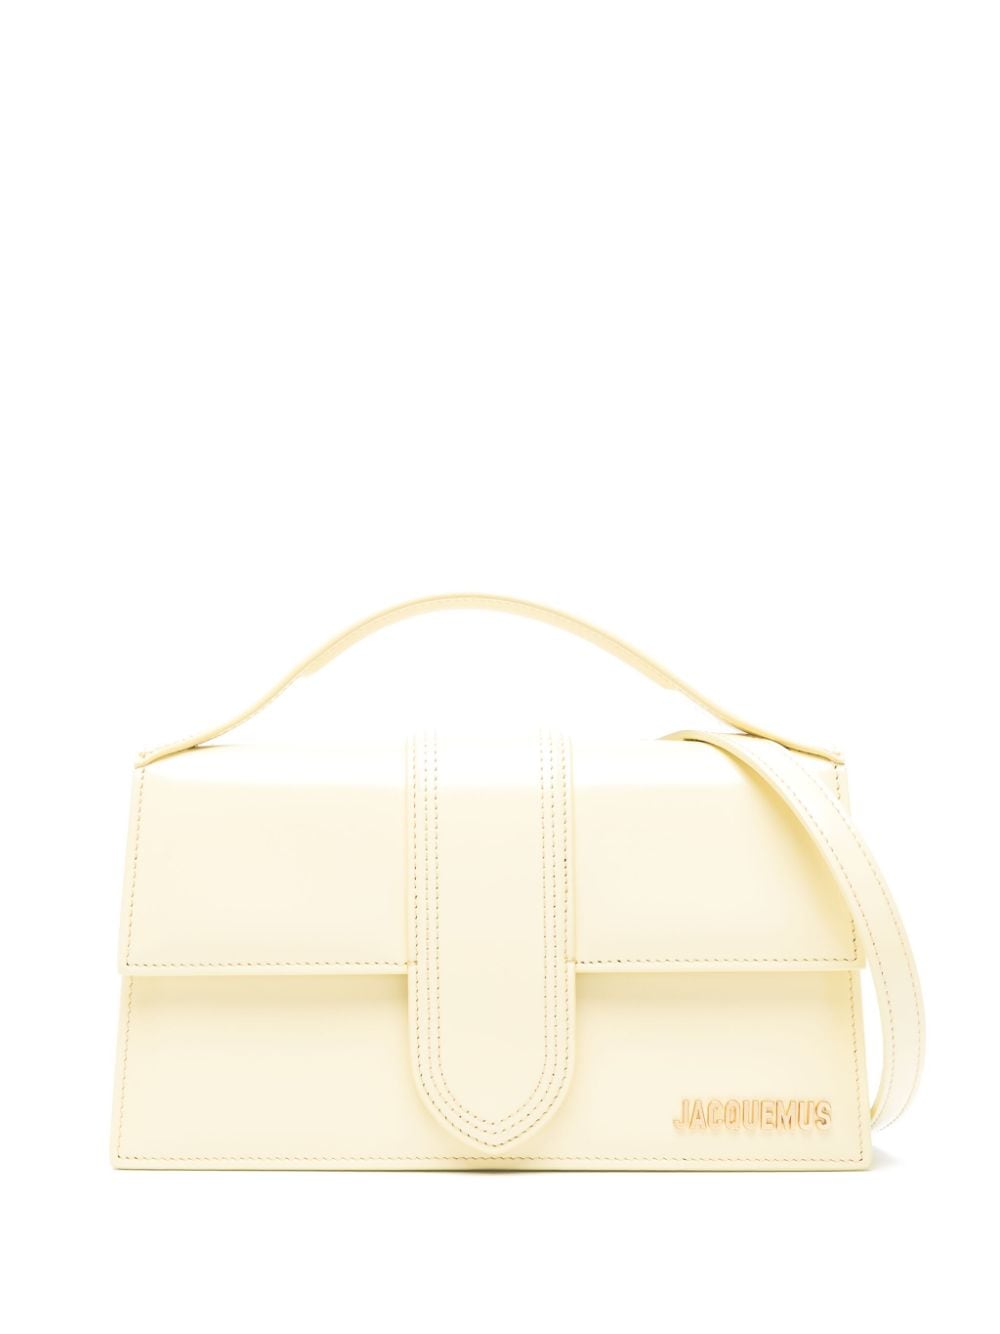 Pale Yellow Top-Handle Handbag by Le Grand Bambino